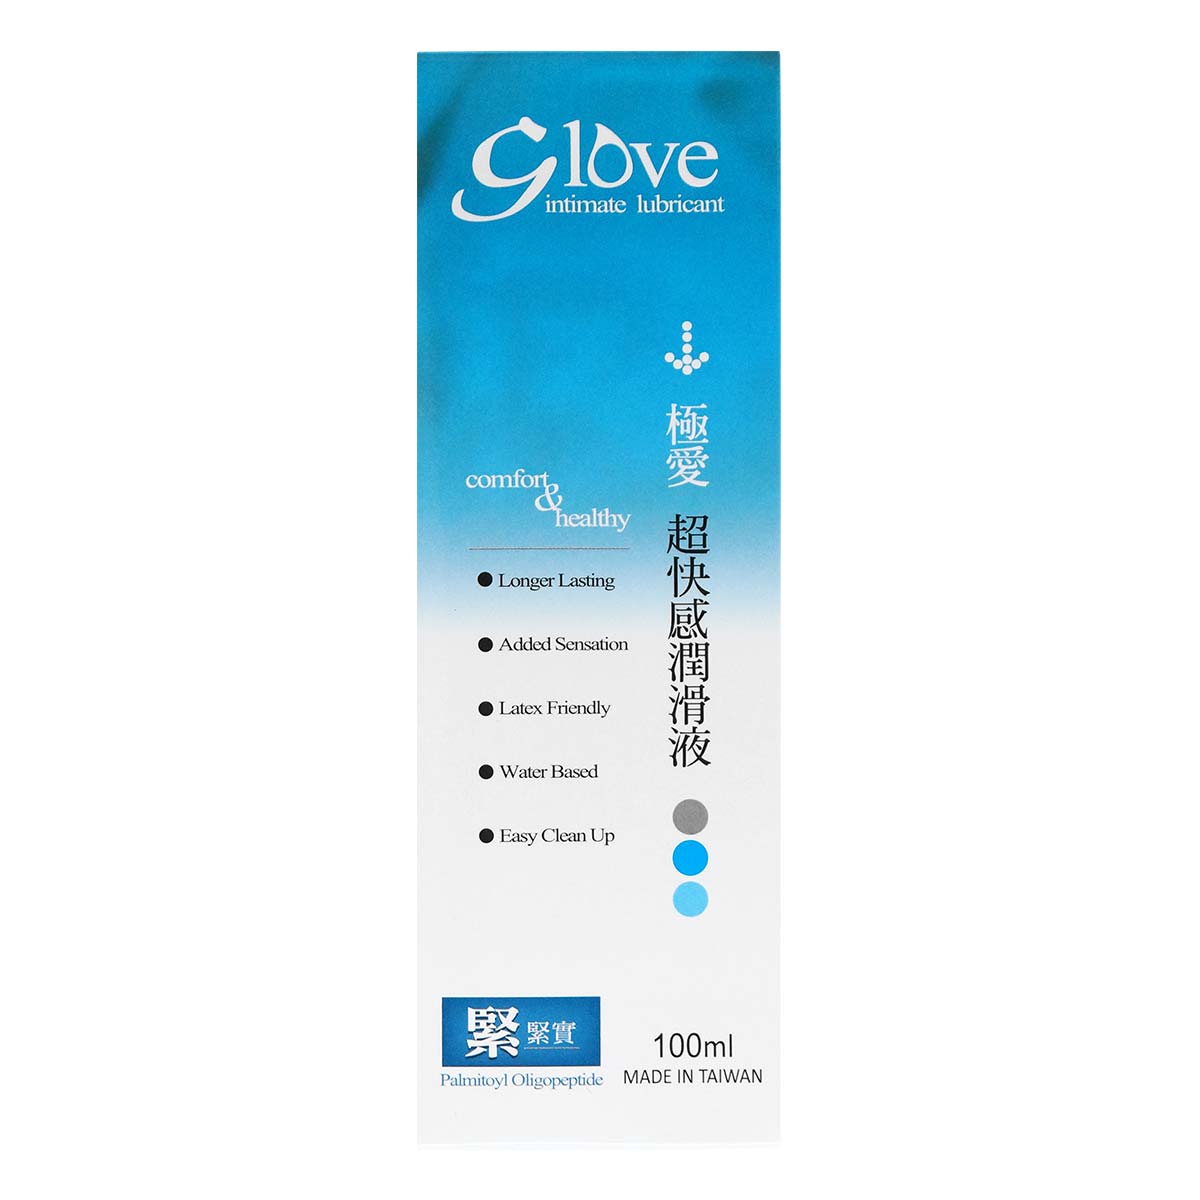 G Love intimate lubricant [Palmitoyl Oligopeptide] 100ml Water-based Lubricant-p_2